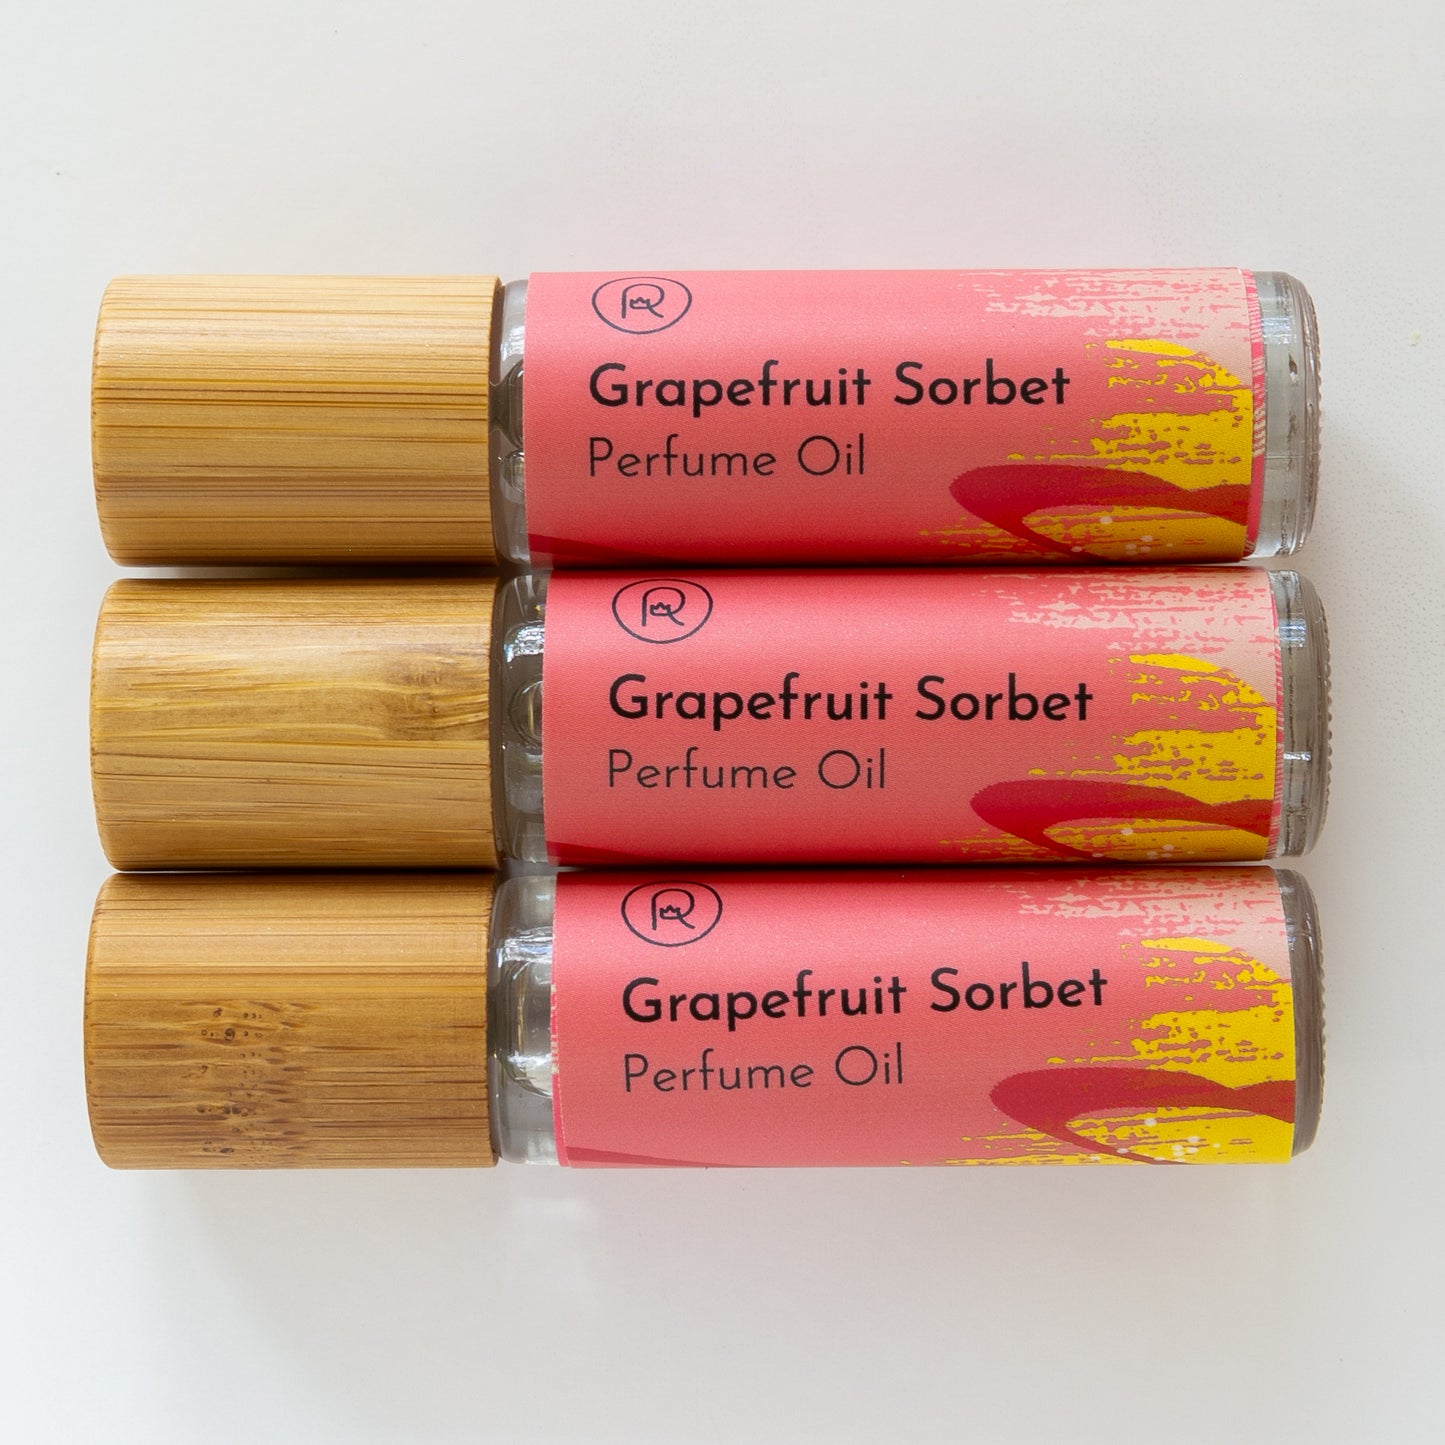 Grapefruit Sorbet Perfume Oil